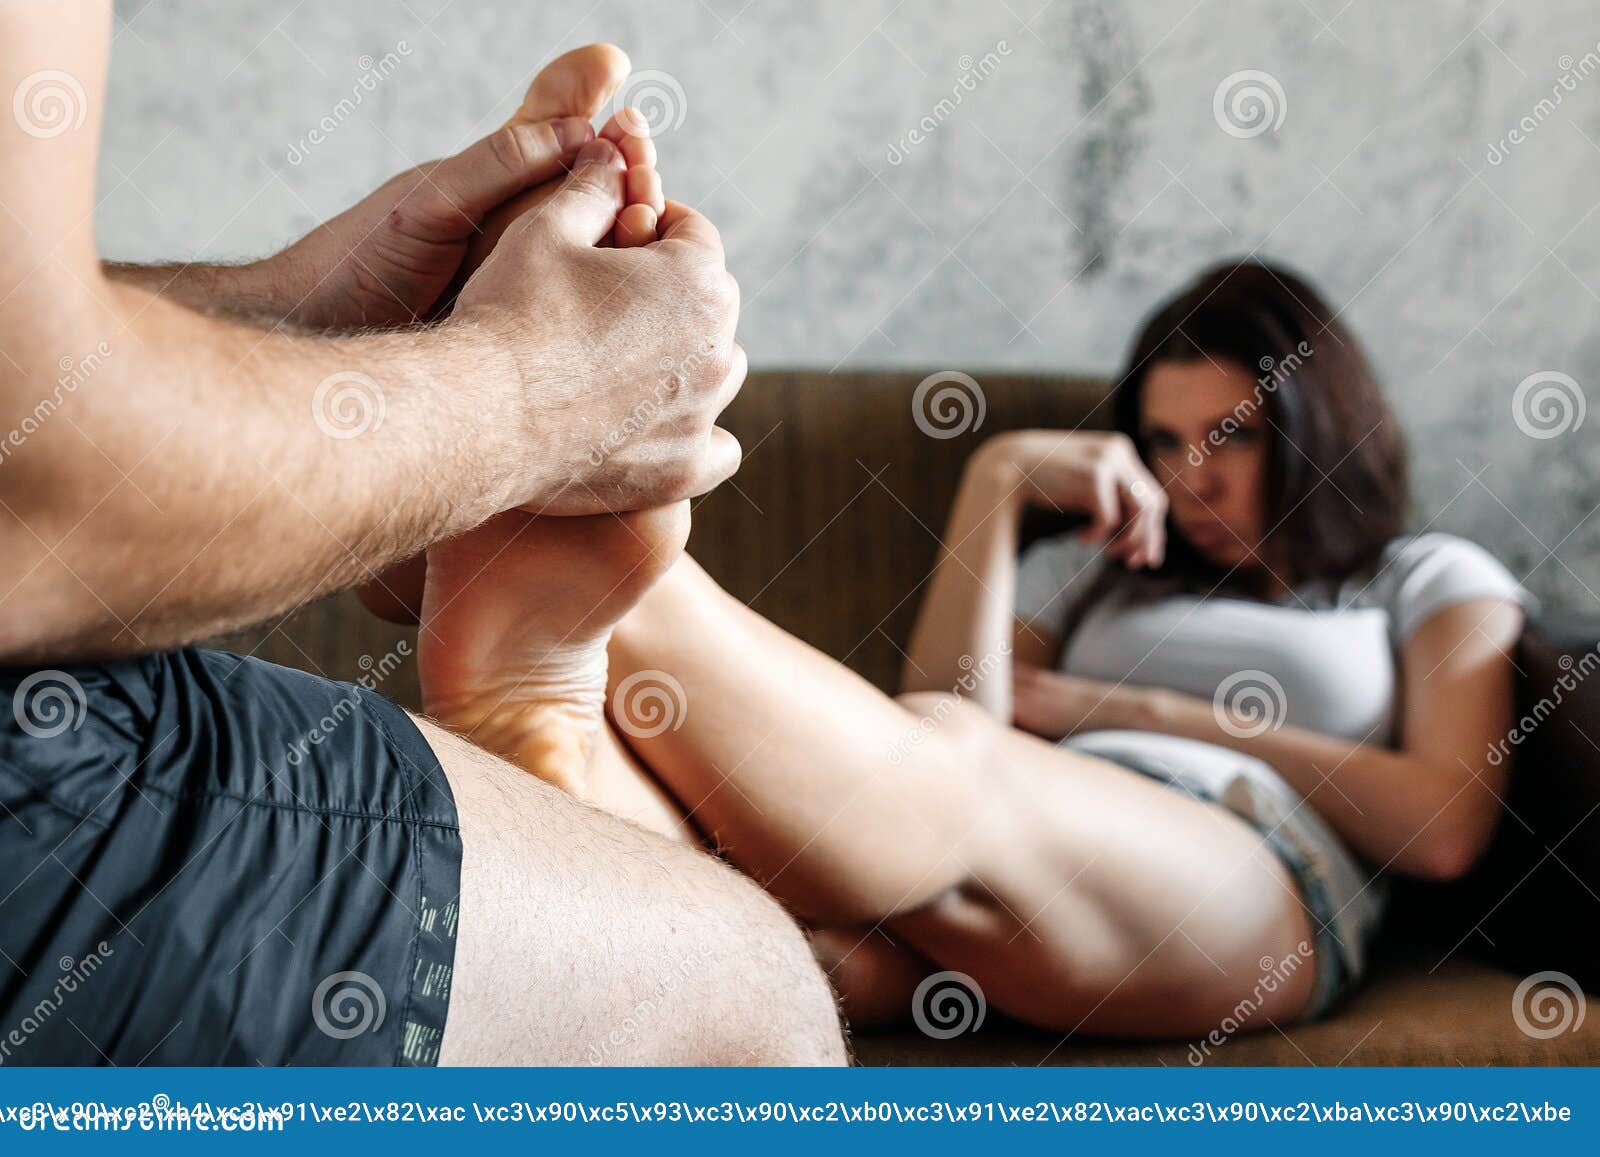 Foot Massage Wife Stock Photos image